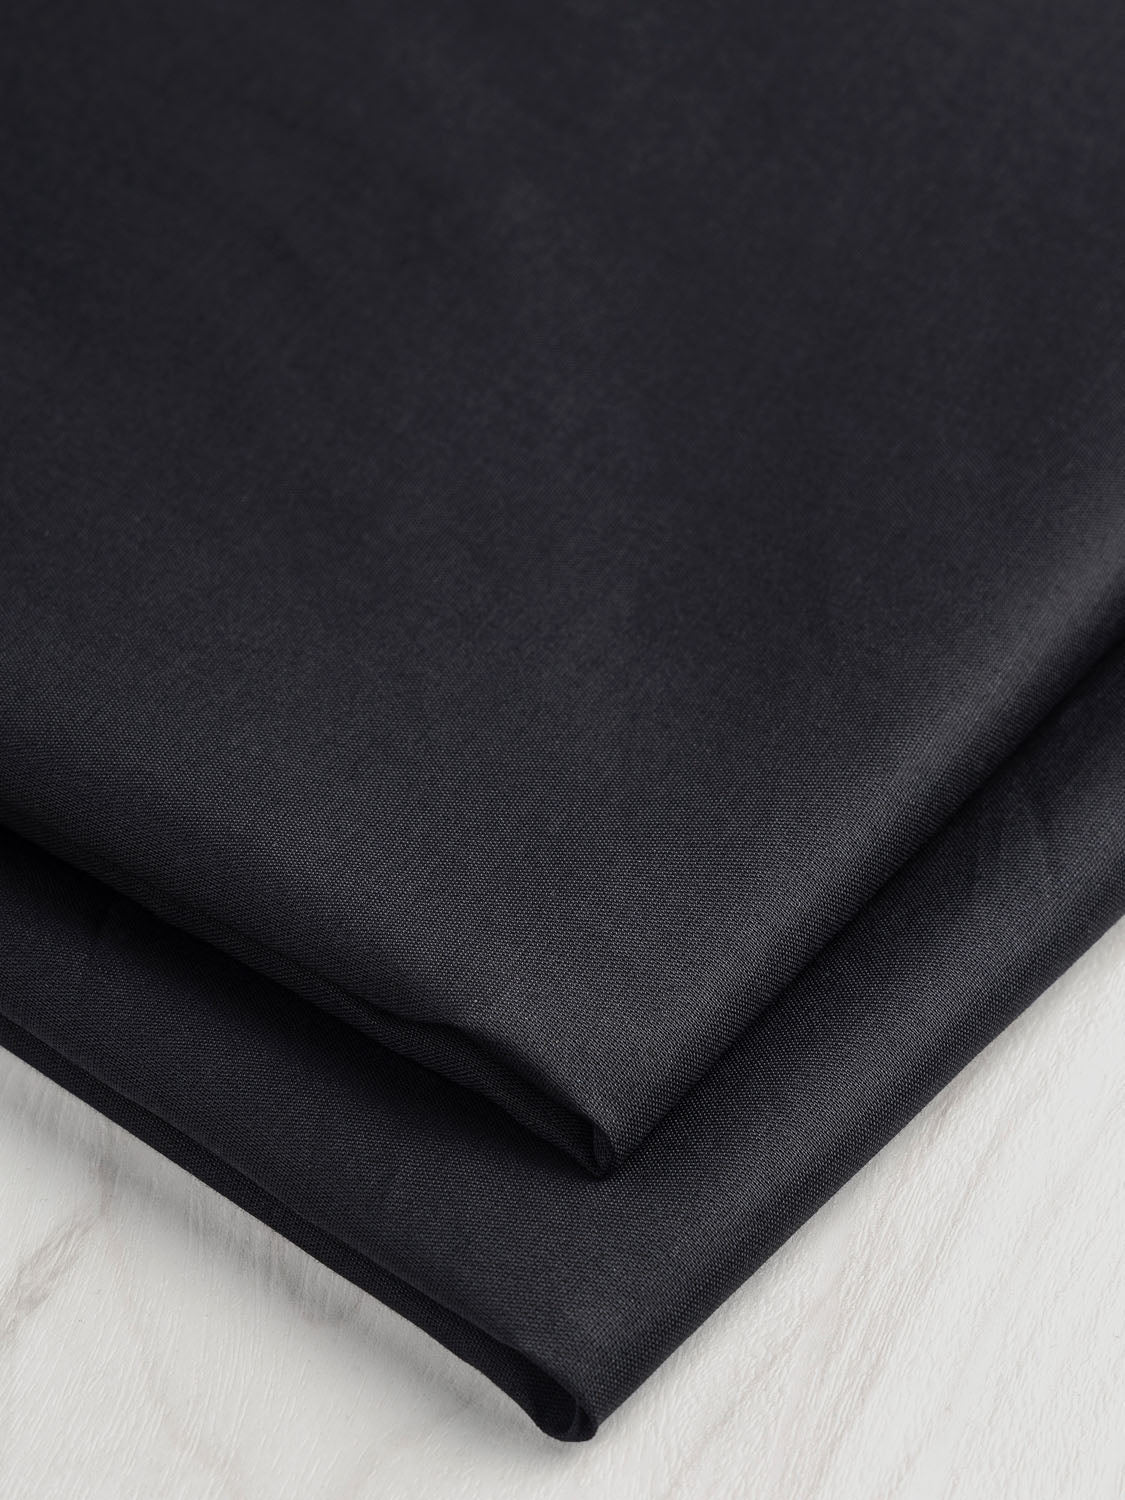 Fabrics fort T-Shirts, Buy Fabrics Online — Fabric Sight